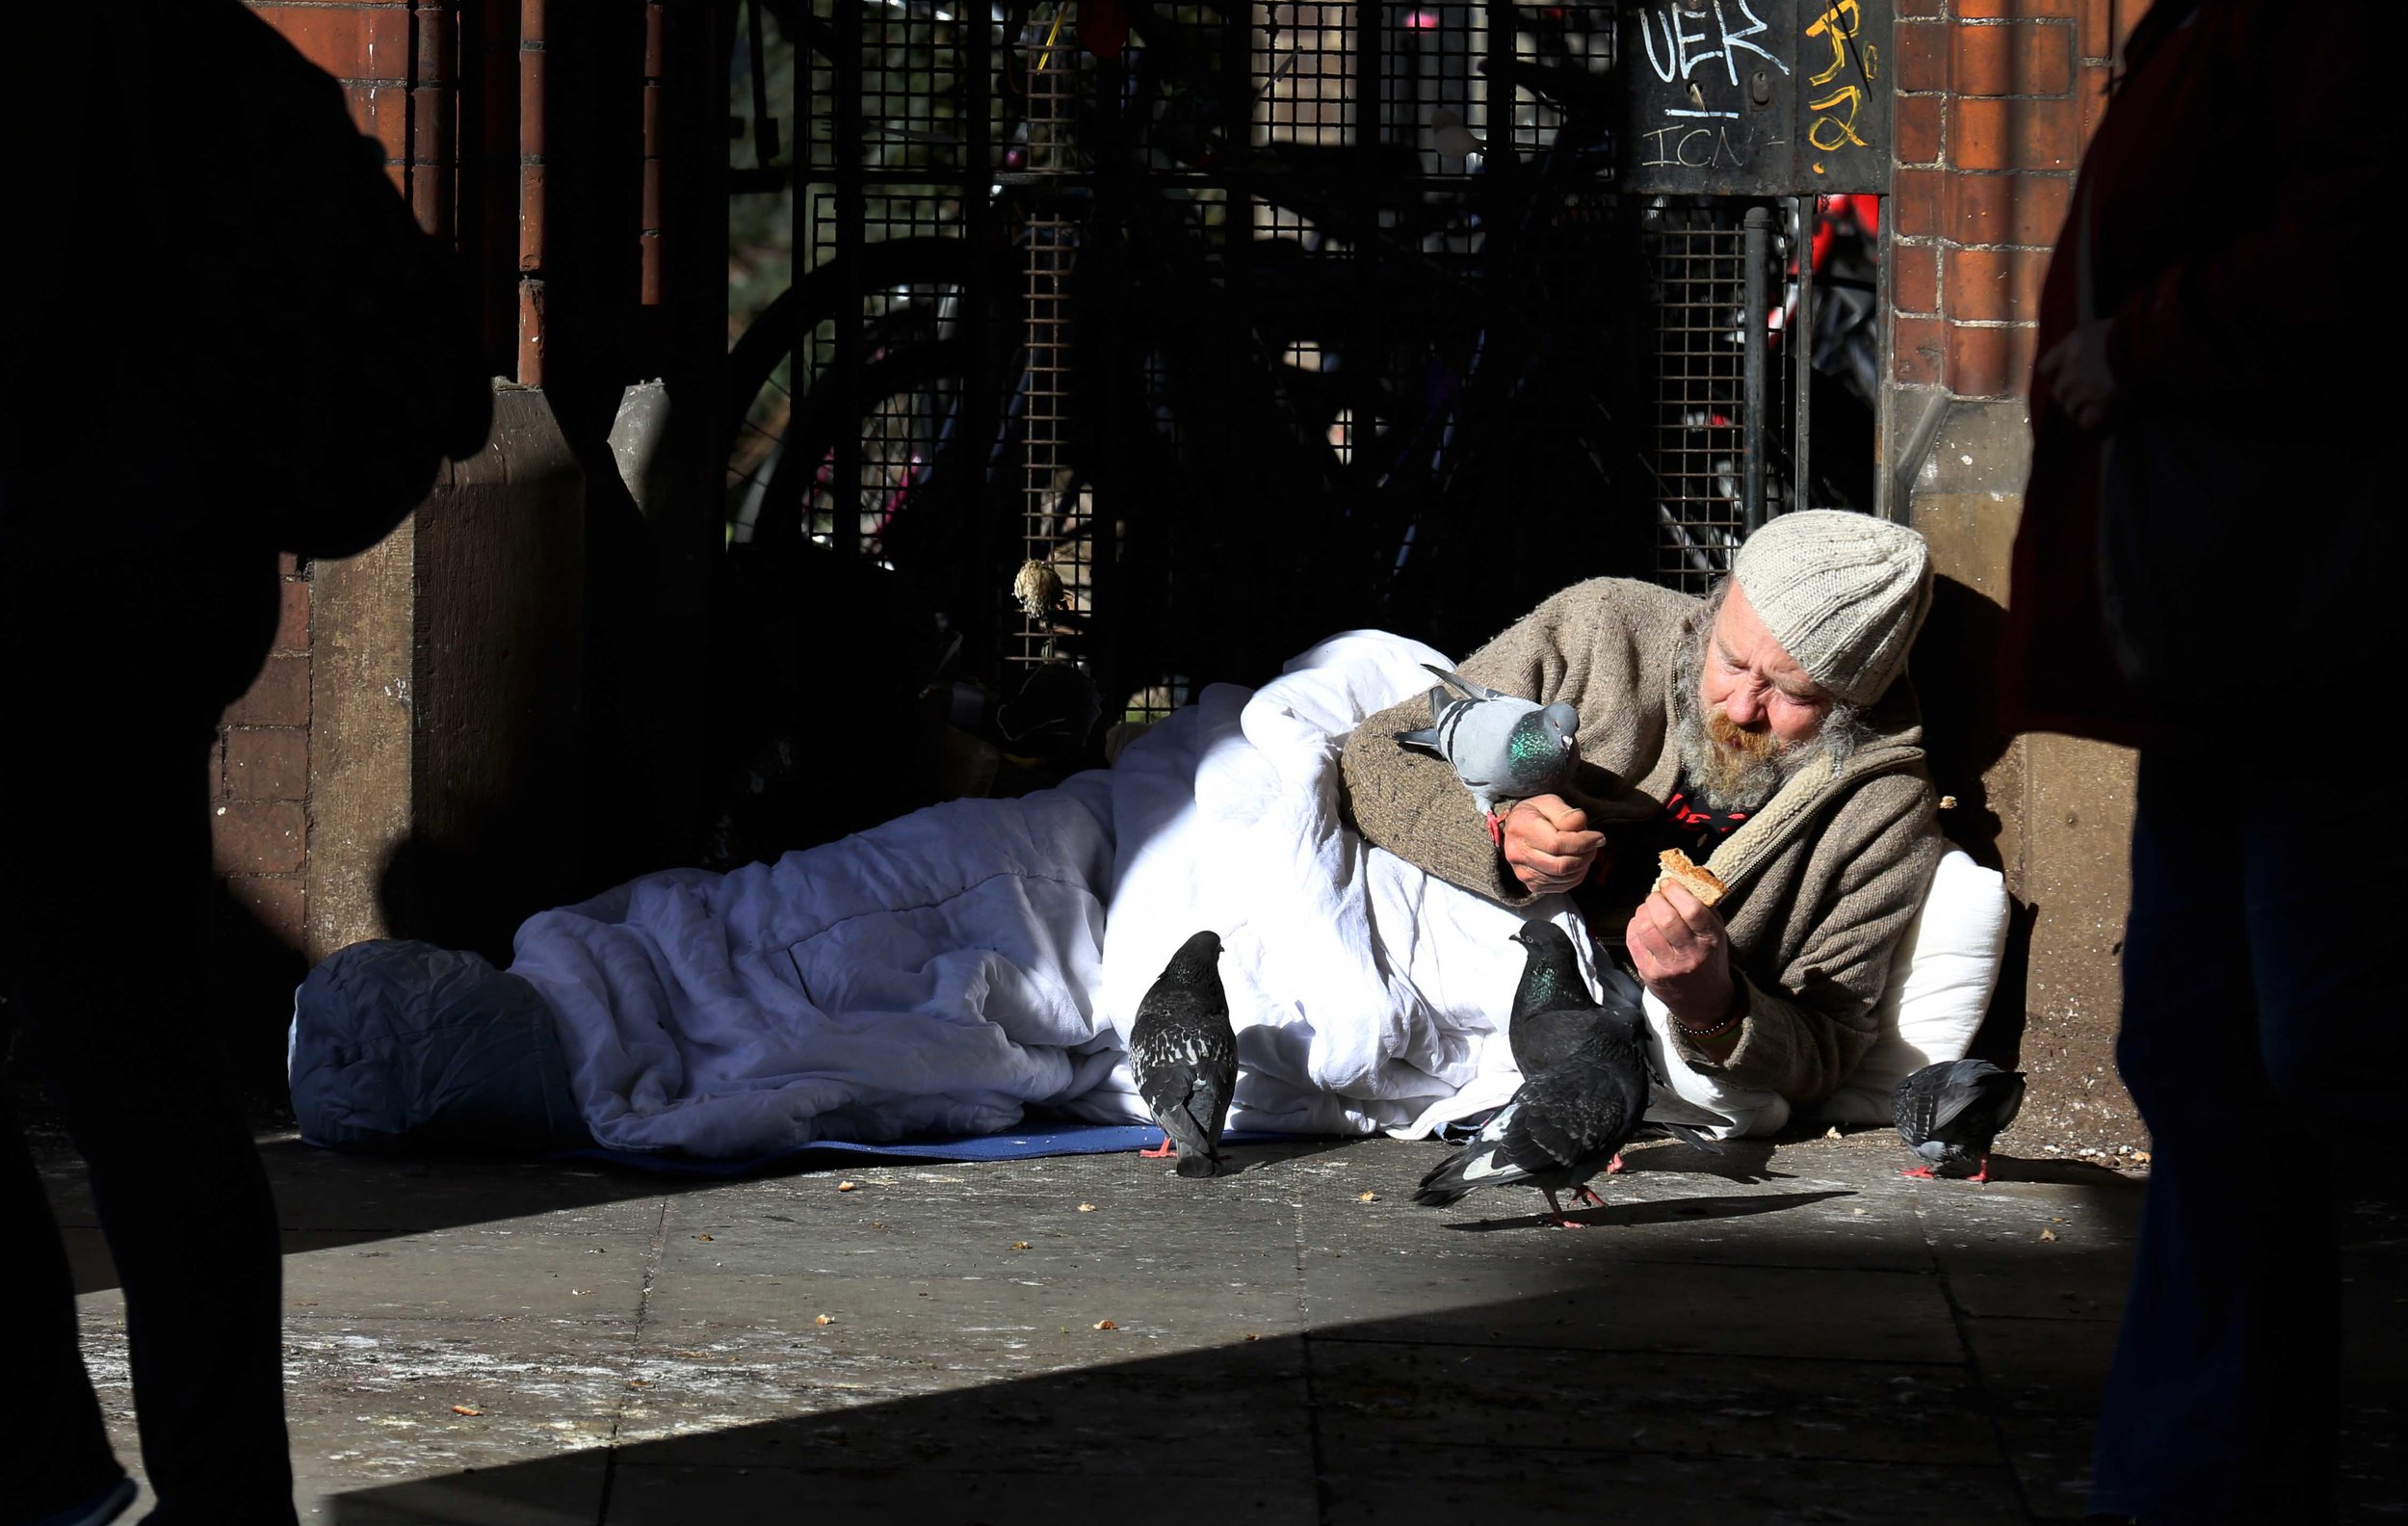  Martin Hart feeds pigeons from his sleeping bag on Westland Row 